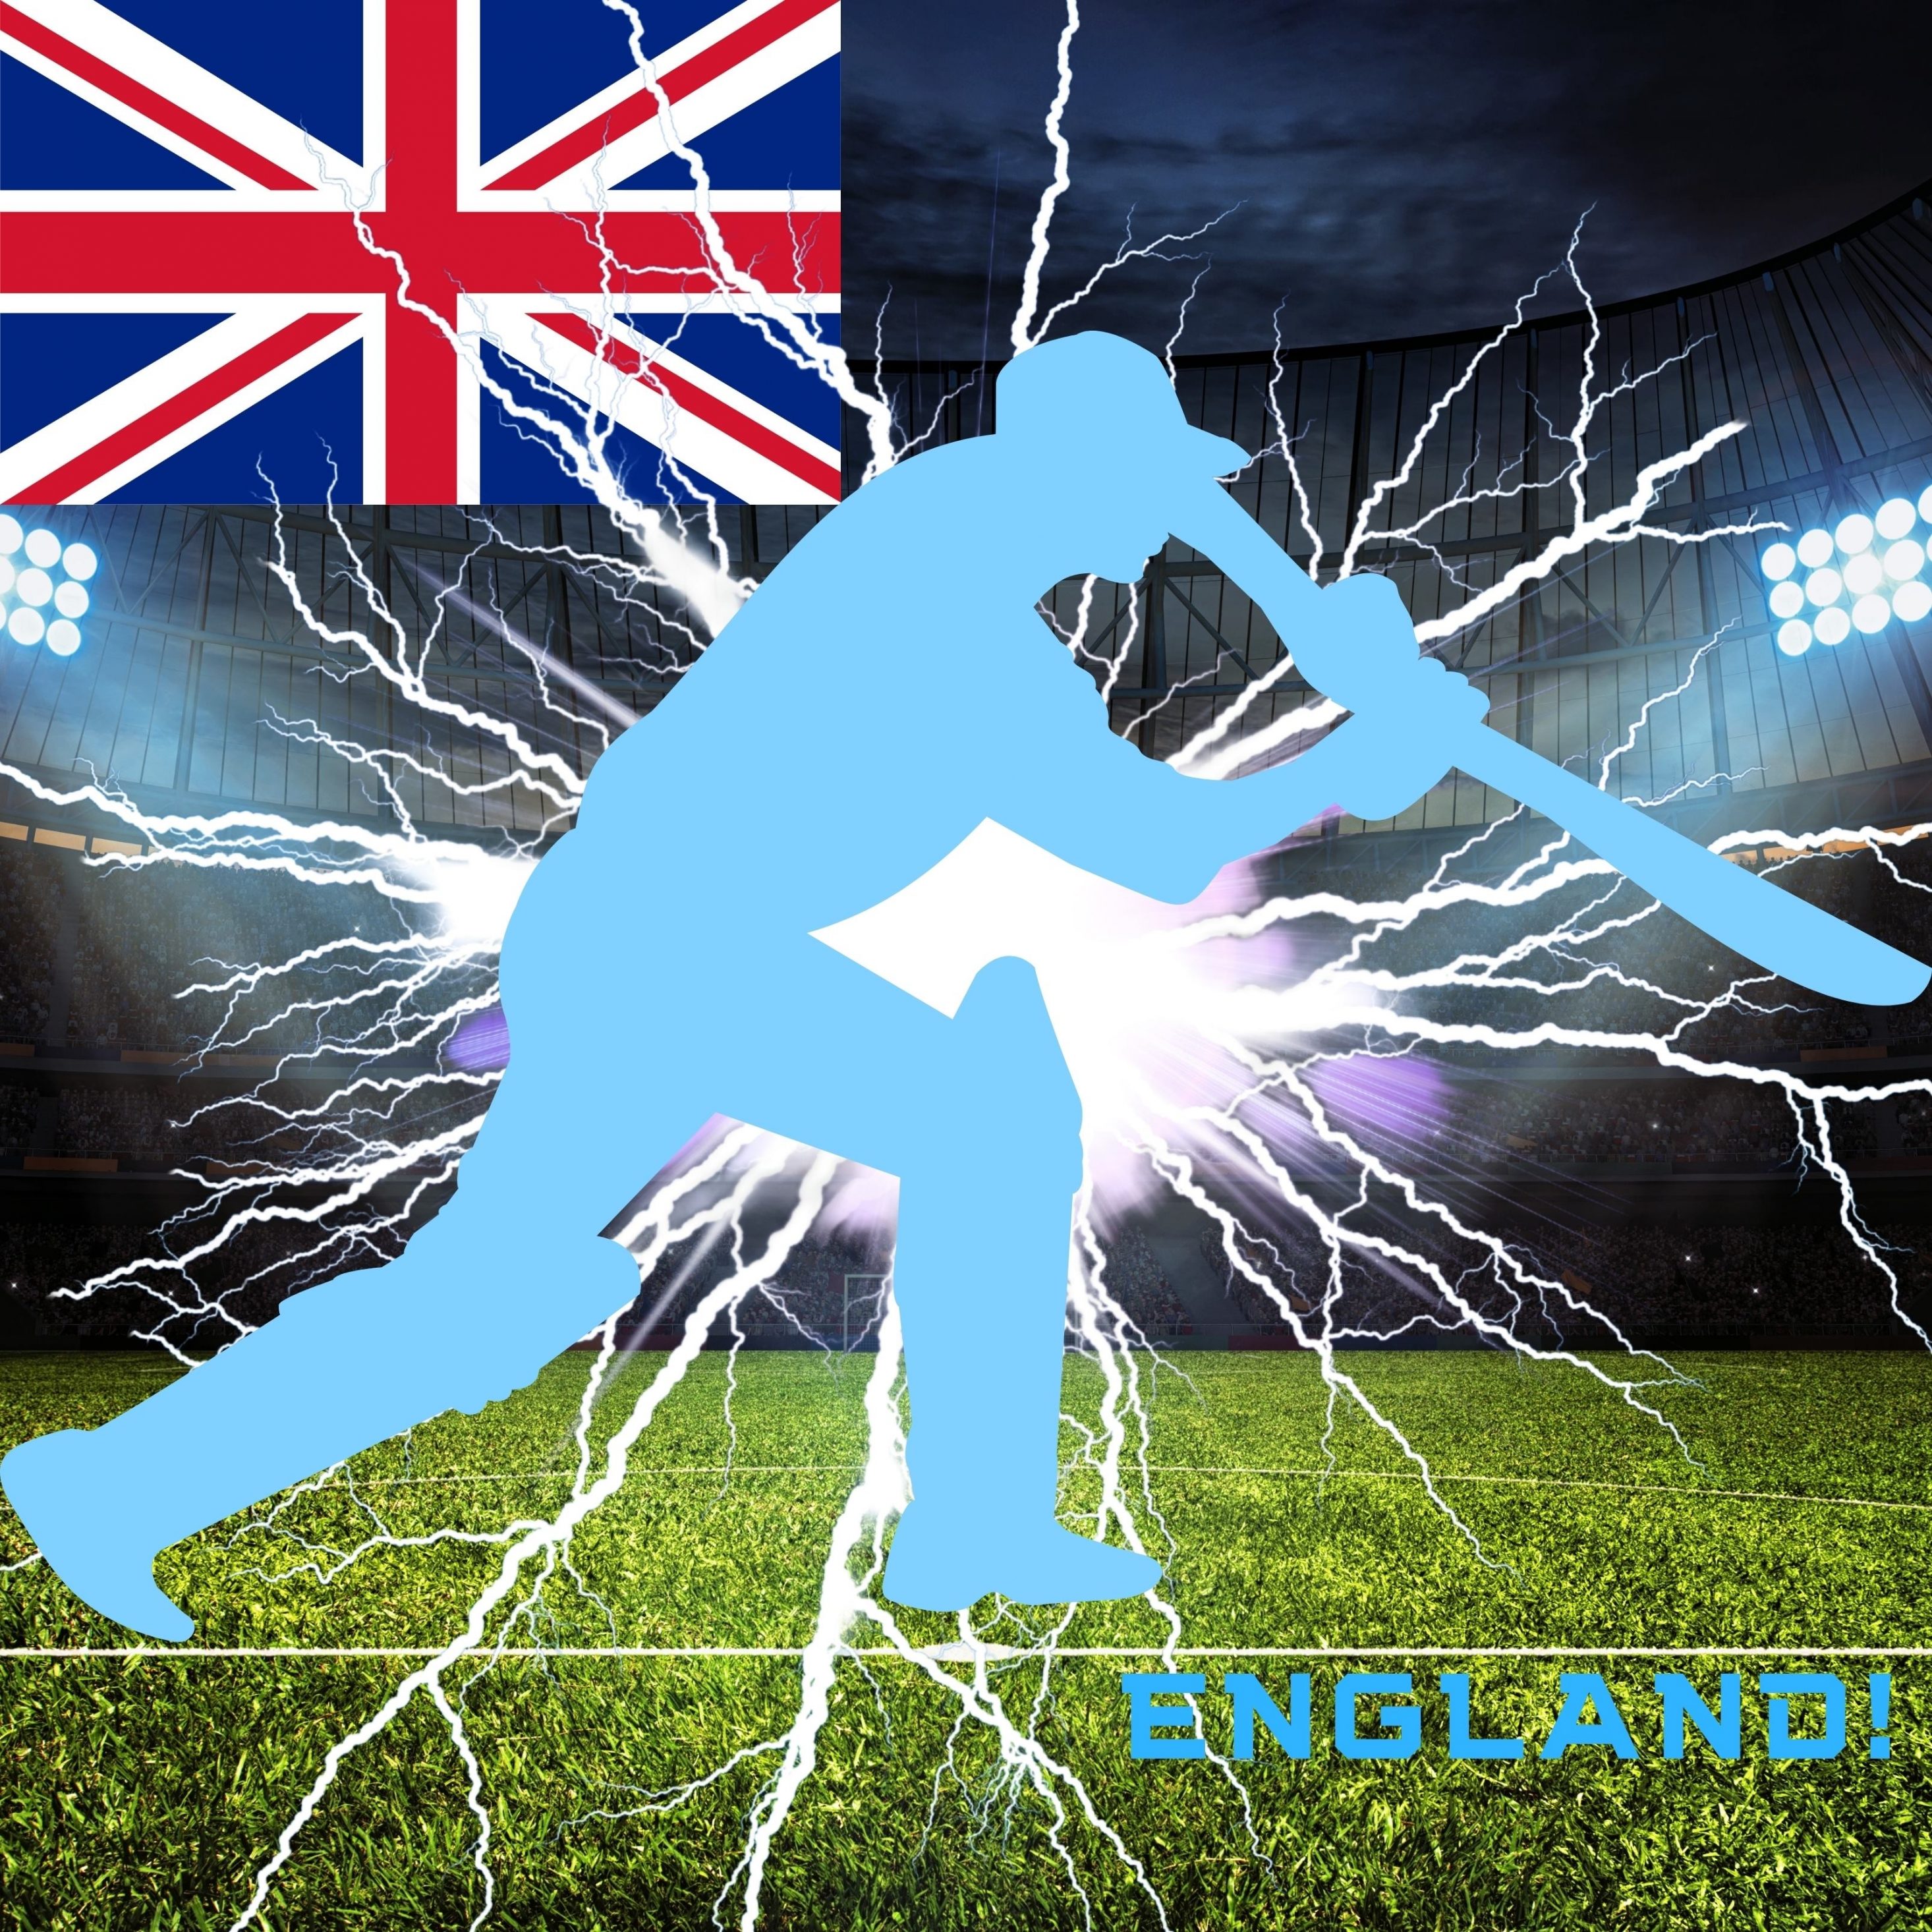 2932x2932 iPad Pro wallpaper 4k England Cricket Stadium iPad Wallpaper 2932x2932 pixels resolution